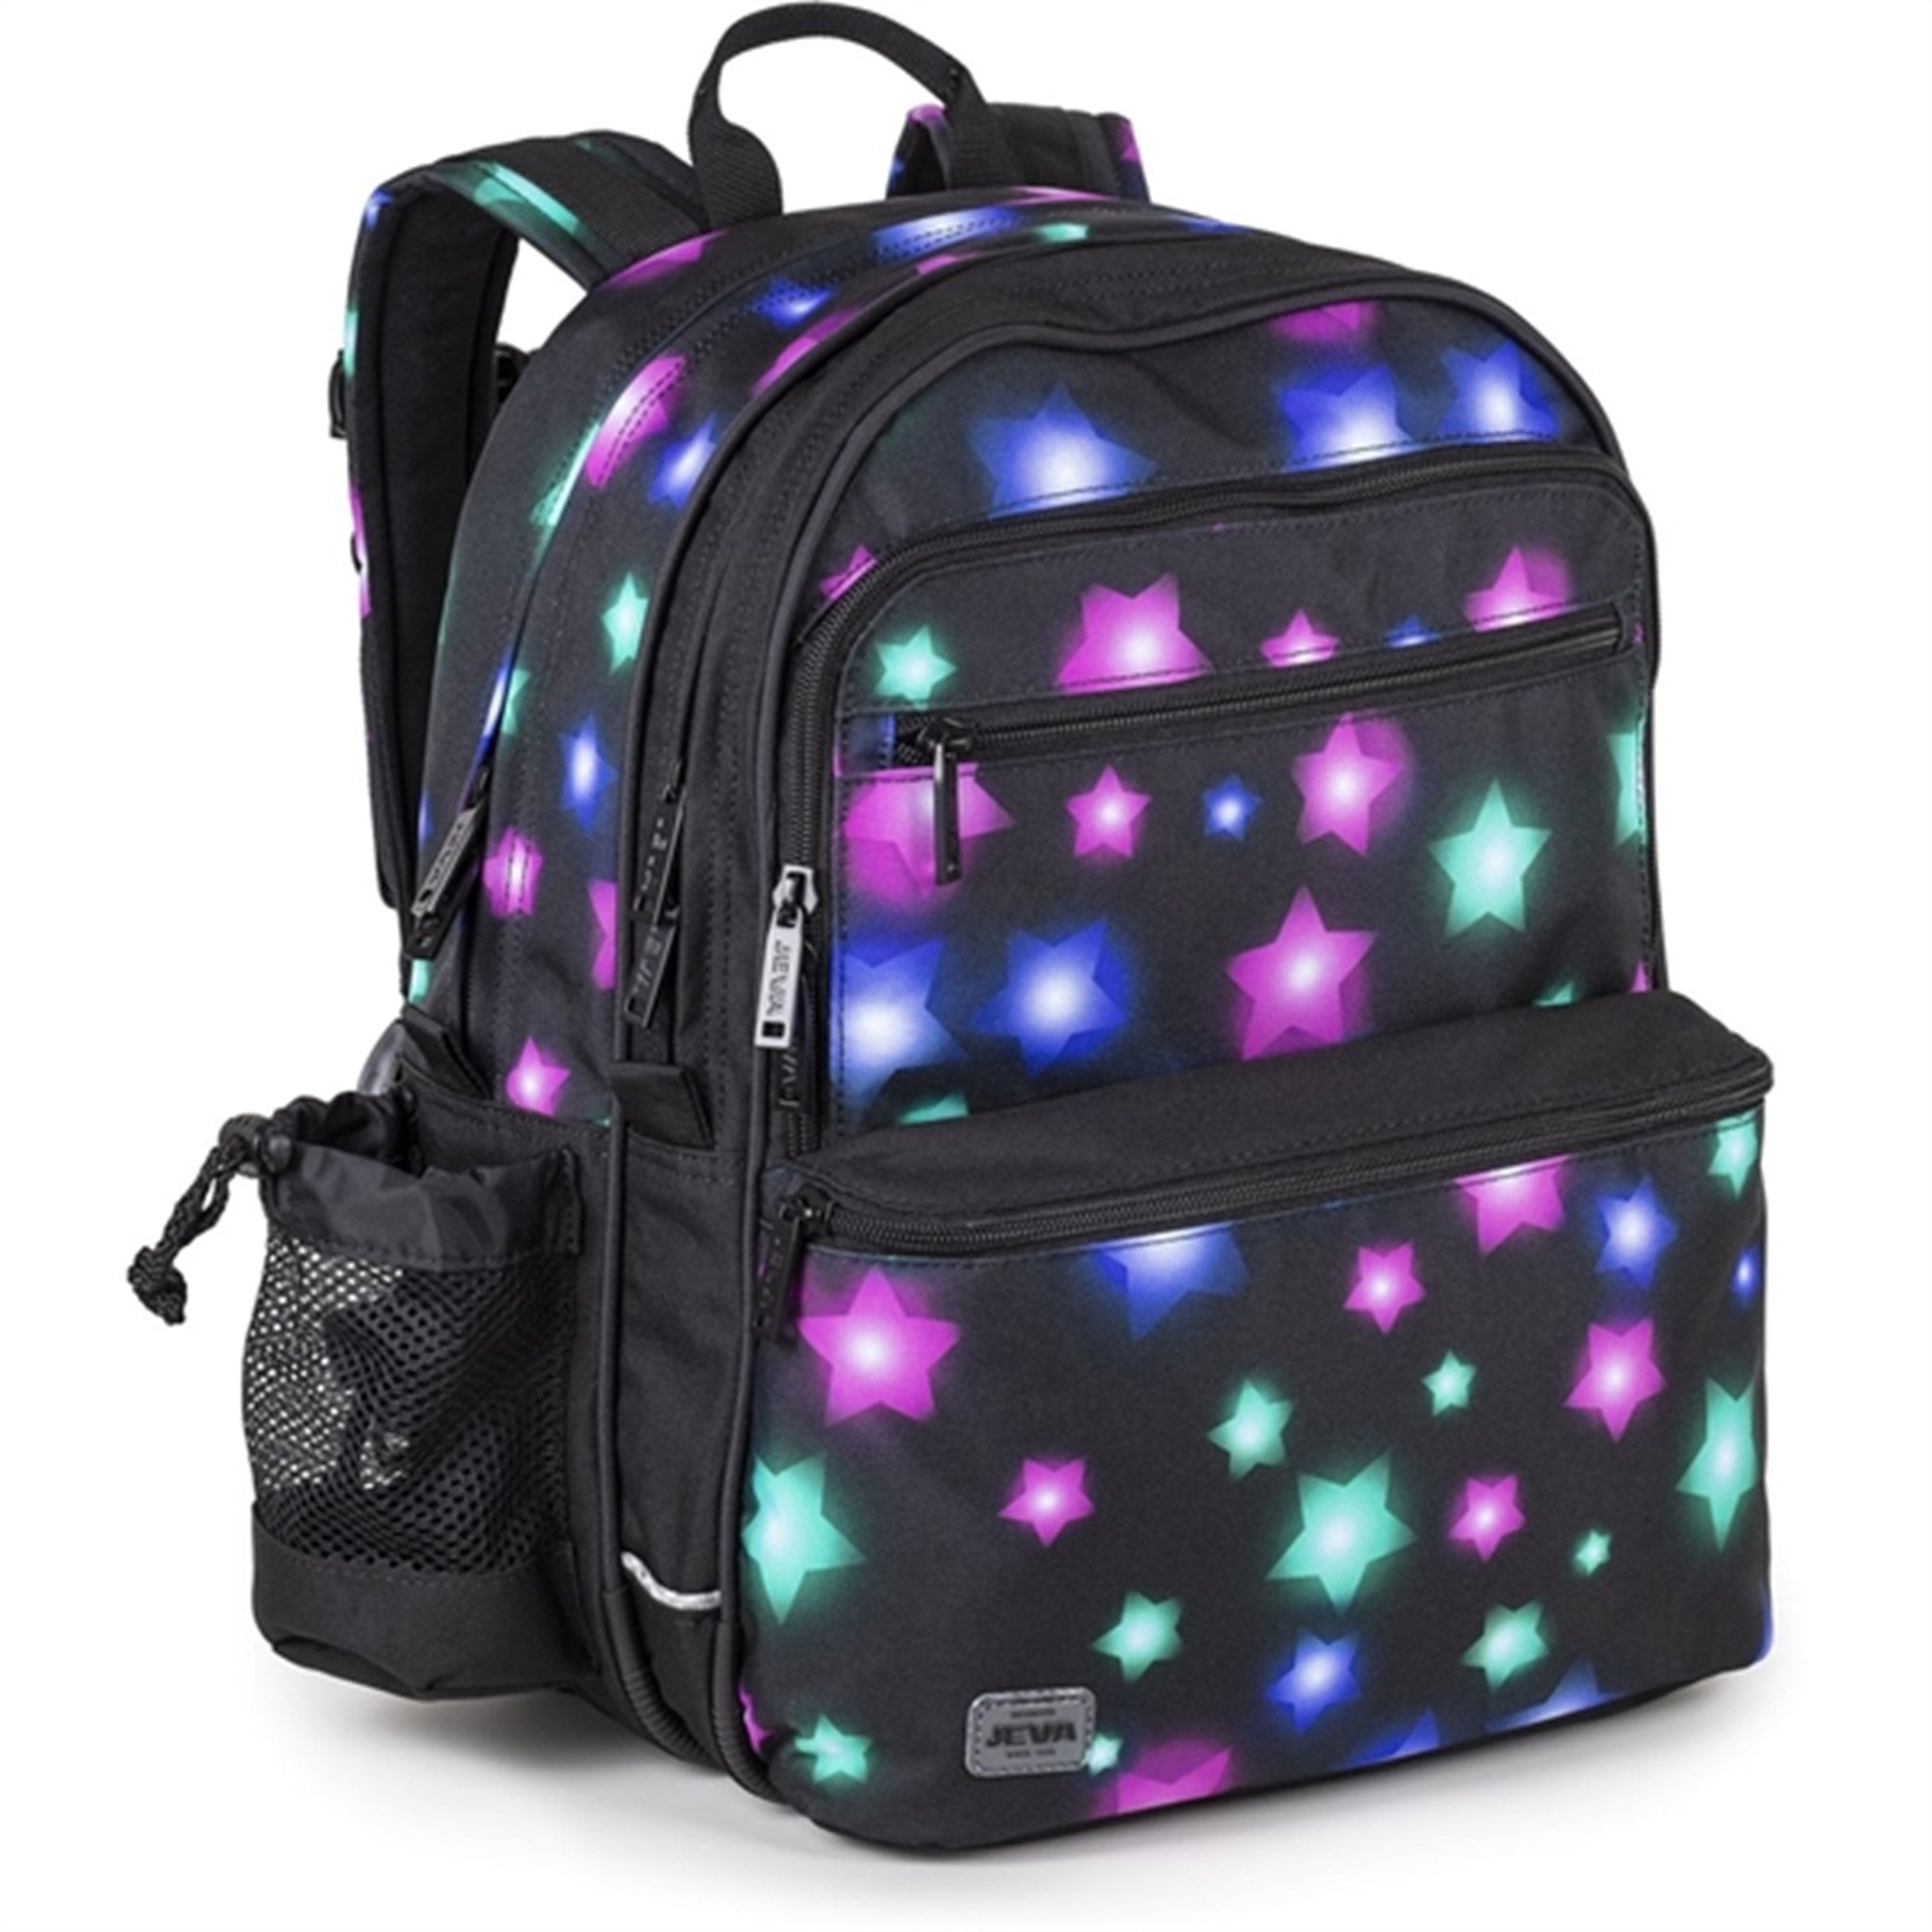 JEVA Backpack Estrellas 4